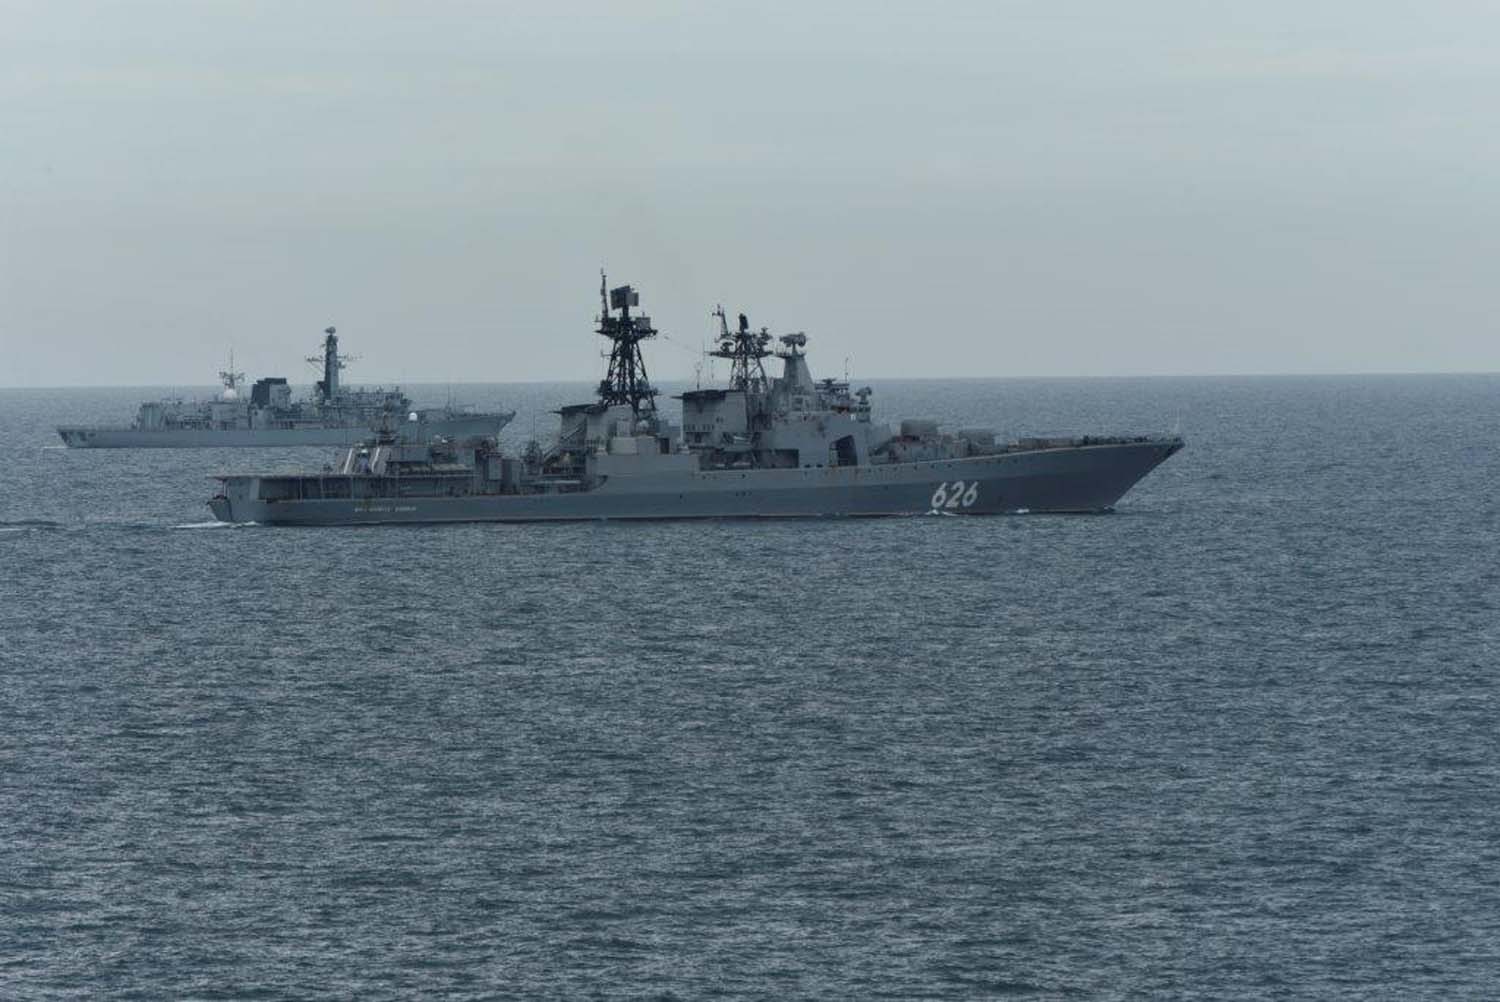 HMS-Richmond-in-the-background-shadowing-the-Russian Kulakov (-626).jpeg